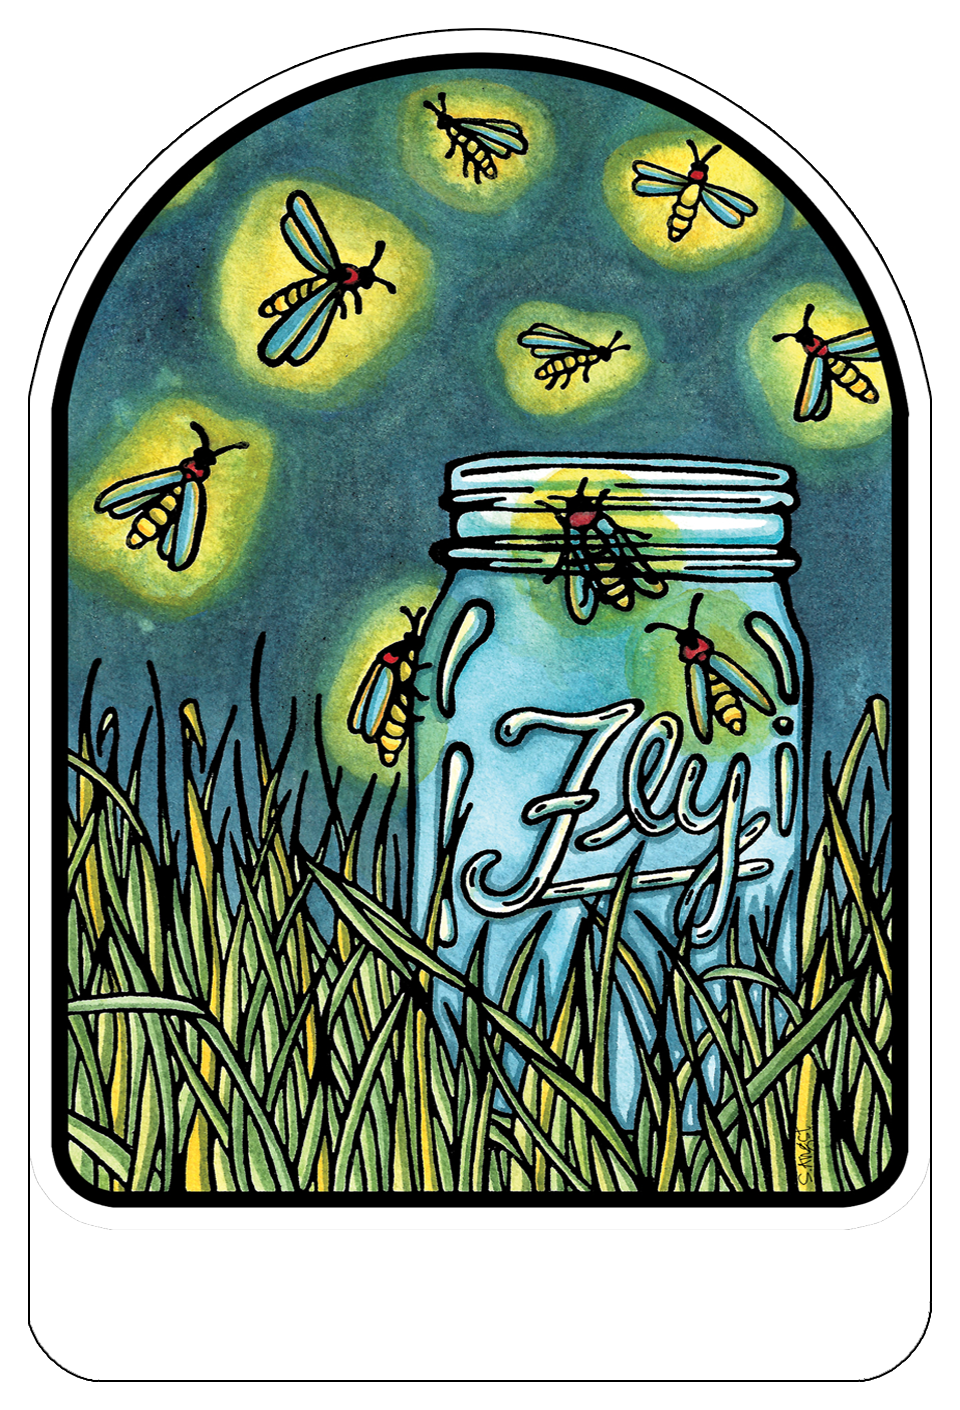 Name Dropped Sticker - QTY 250: Fireflies